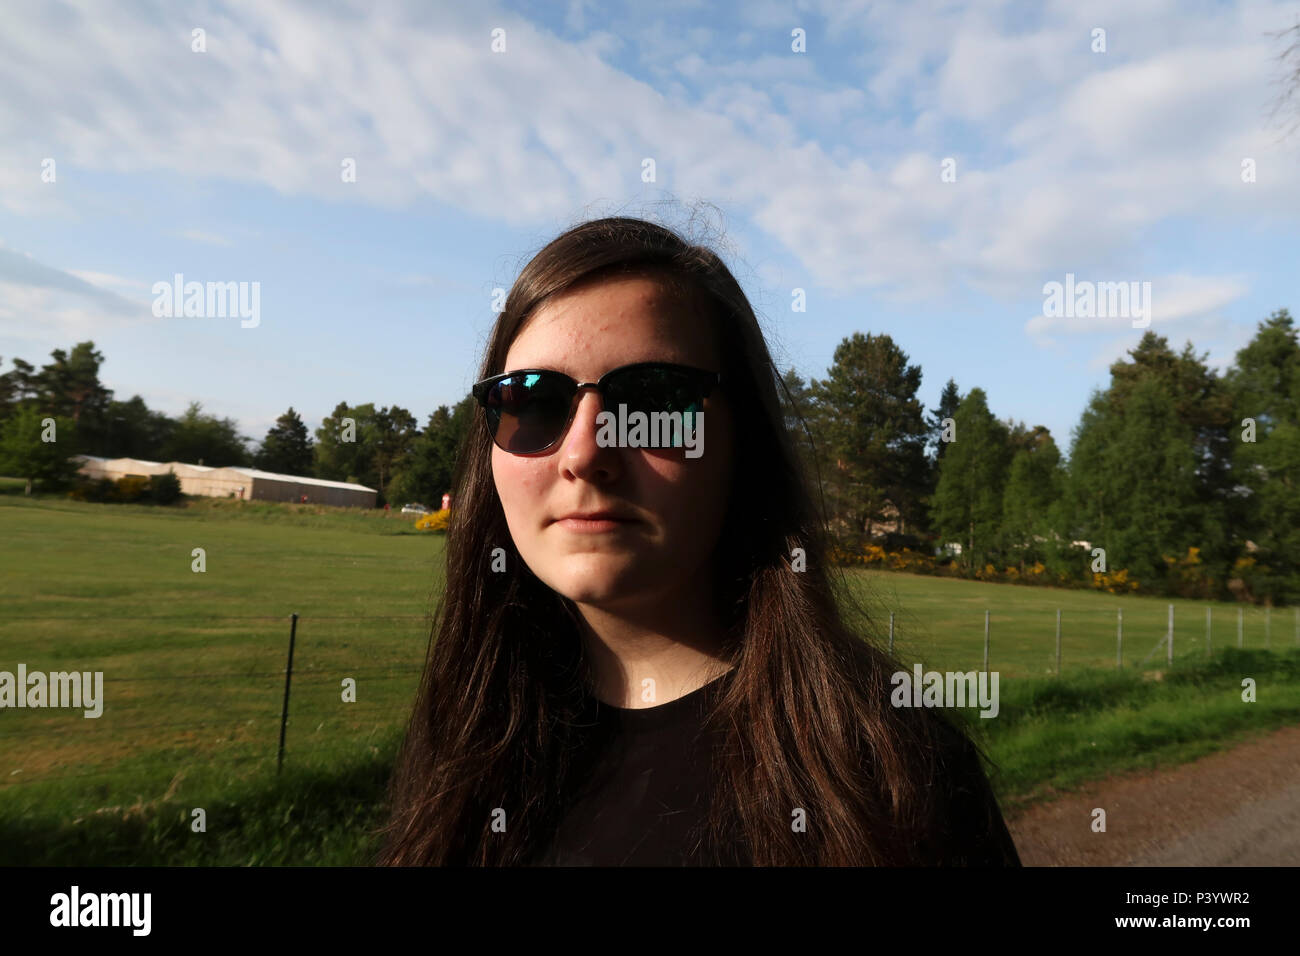 Portrait of bemused teenage girl with sunglasses Stock Photo